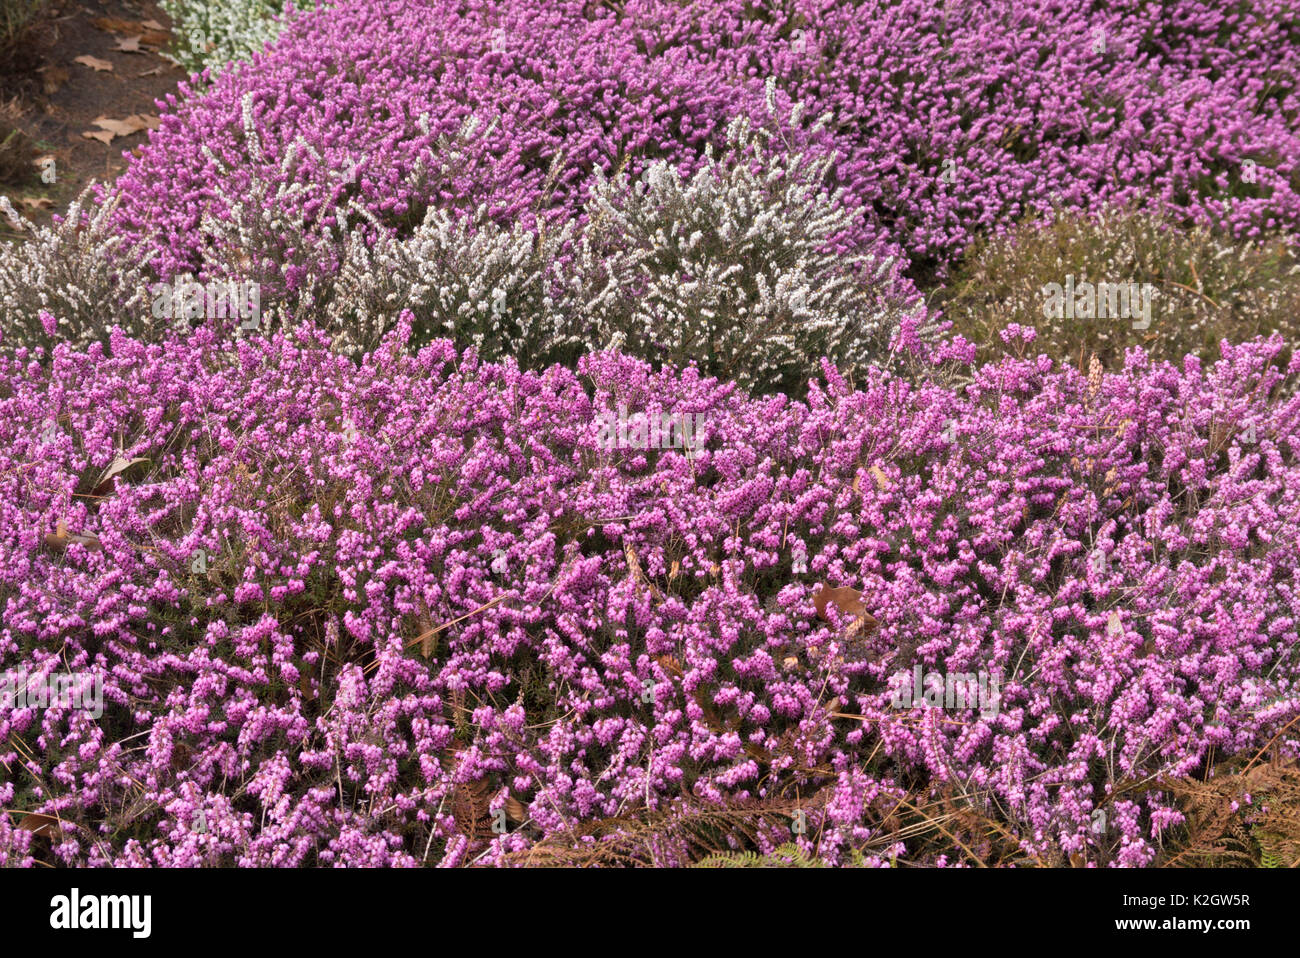 Inverno erica (Erica carnea " dicembre rosso' syn. erica herbacea "dicembre rosso") e inverno heath (erica x darleyensis 'silberschmelze') Foto Stock